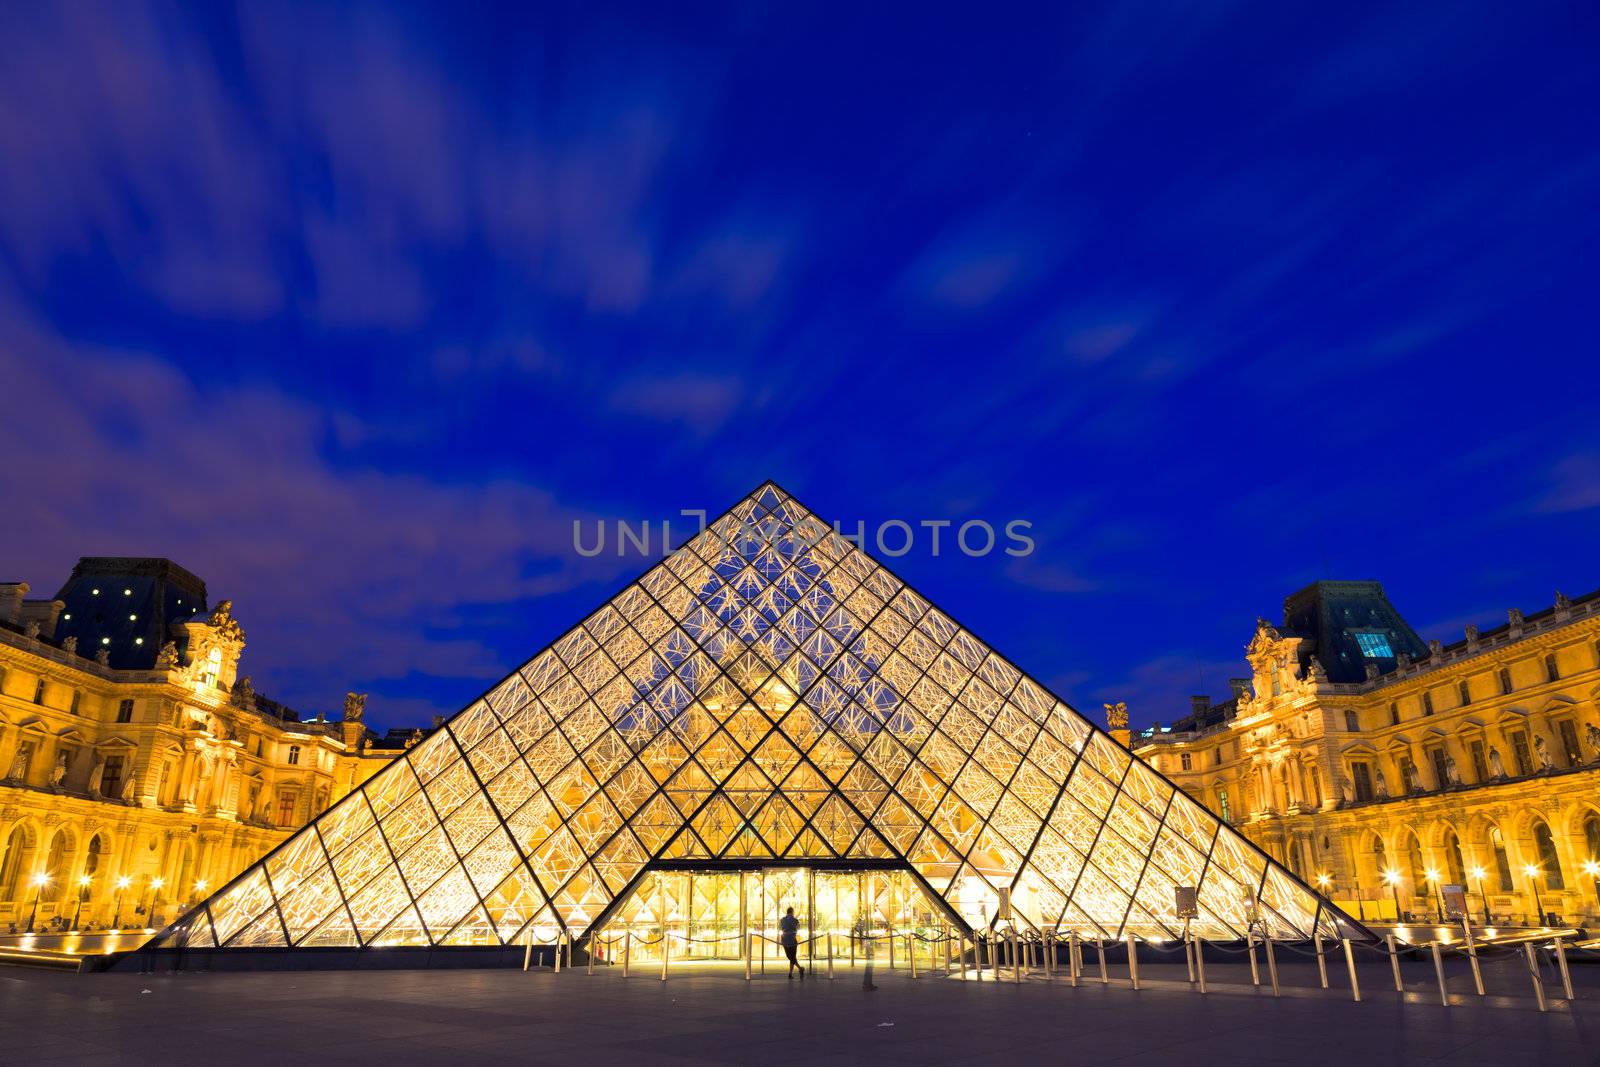 The Louvre, Paris by Tom